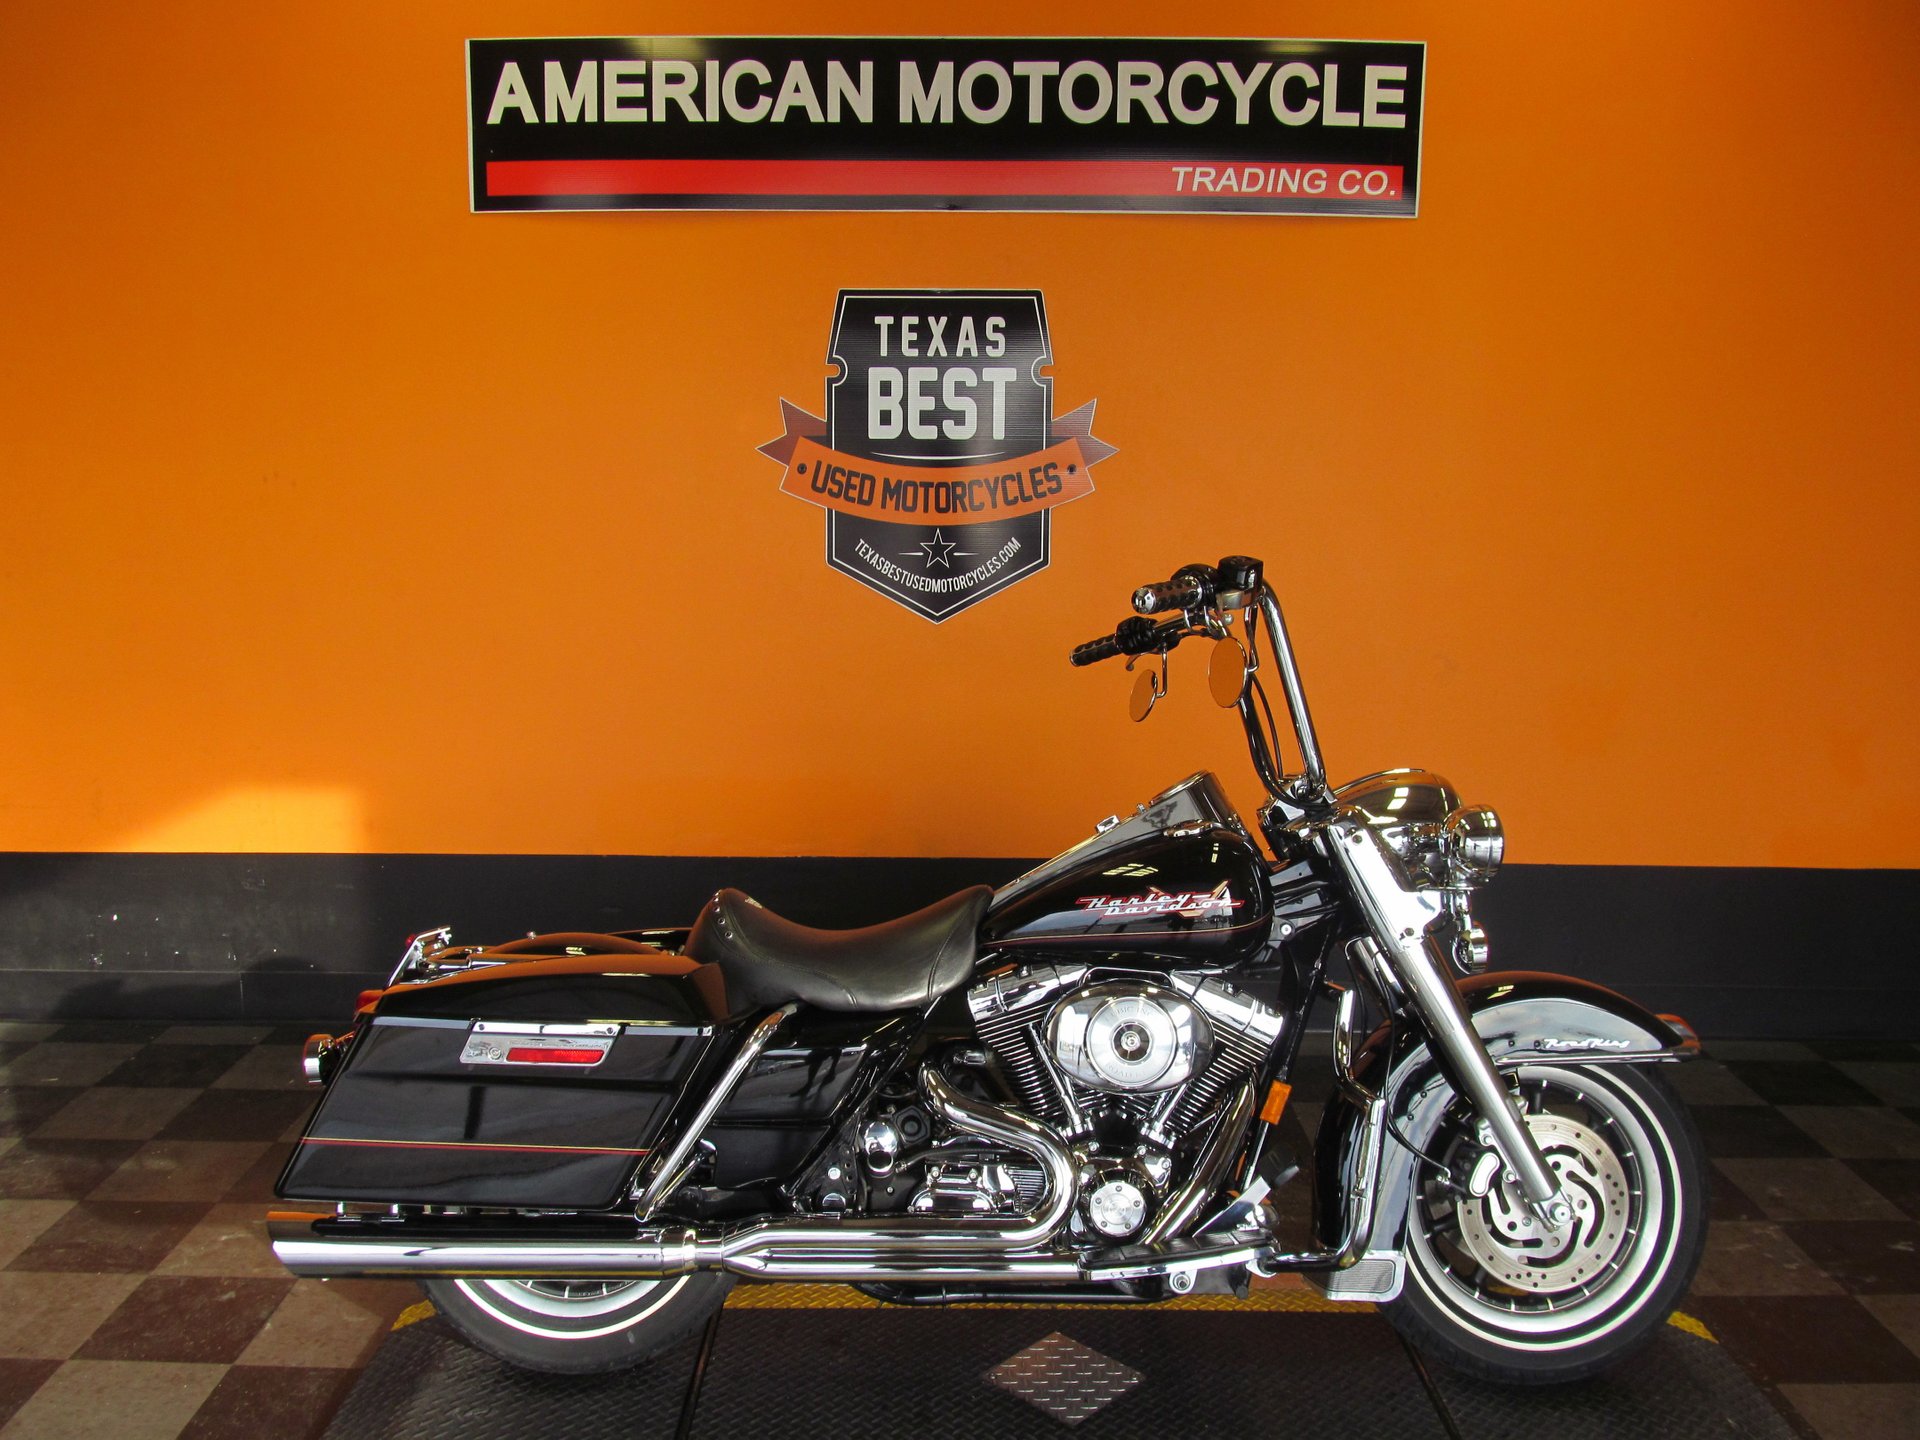 2002 Harley-Davidson Road King | American Motorcycle Trading Company - Used  Harley Davidson Motorcycles